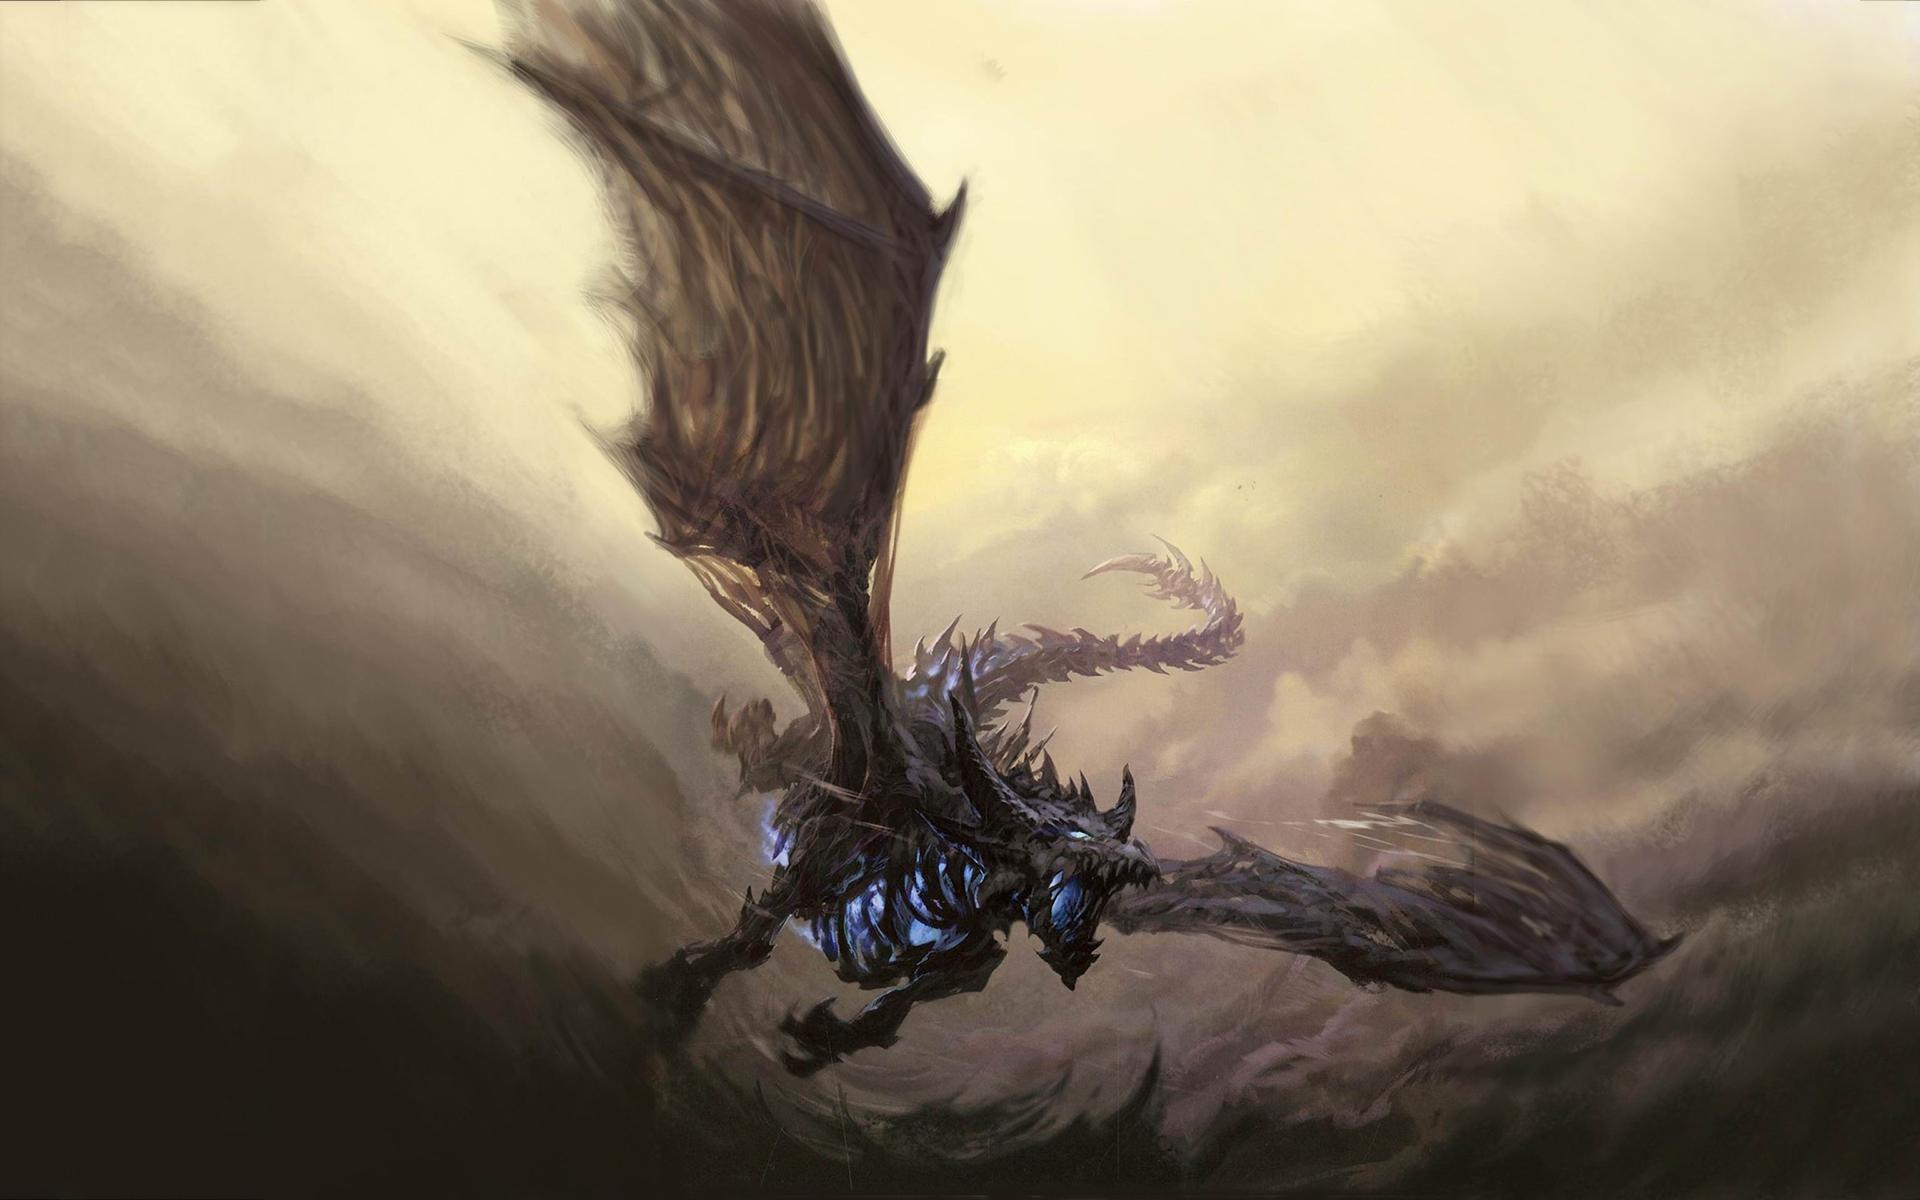 Dragon fantasy art